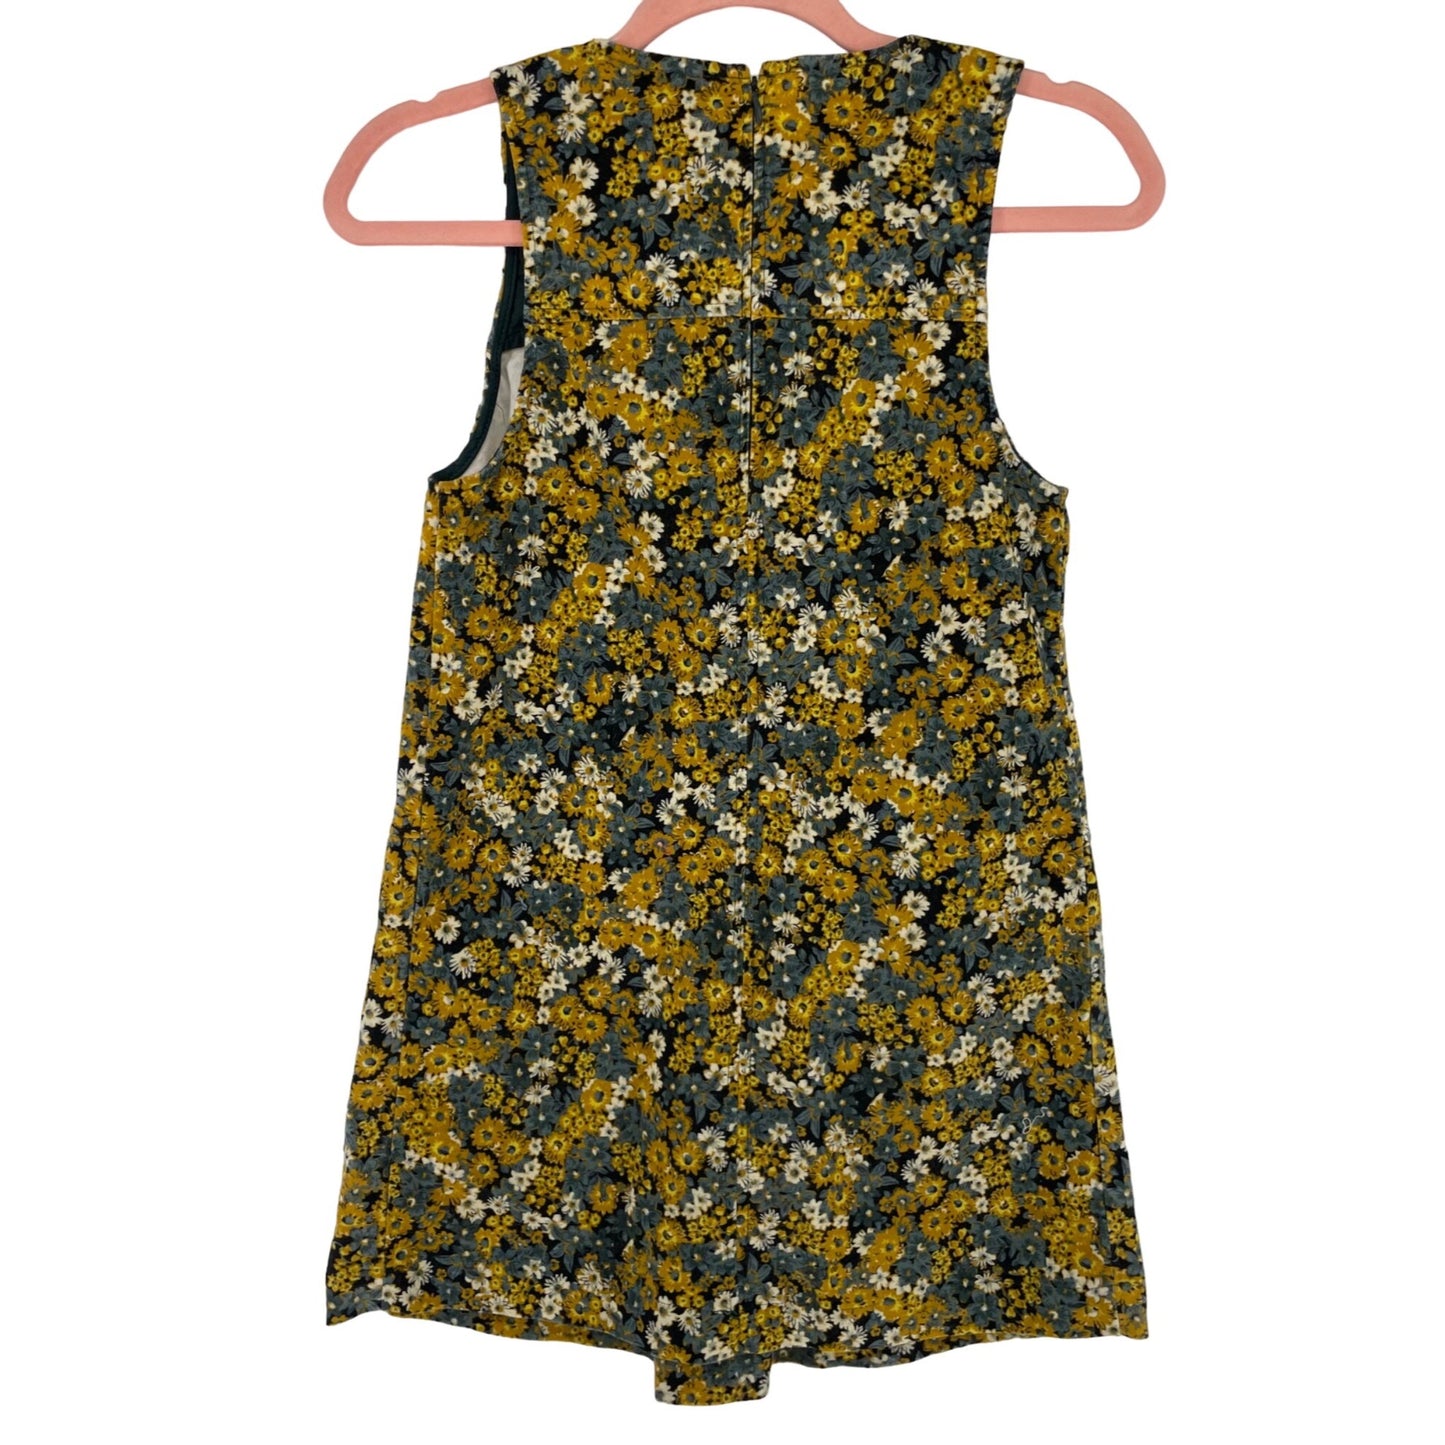 Zara Girls Size 11/12 Yellow, Teal & White Corduroy Sleeveless Pleated Floral Dress